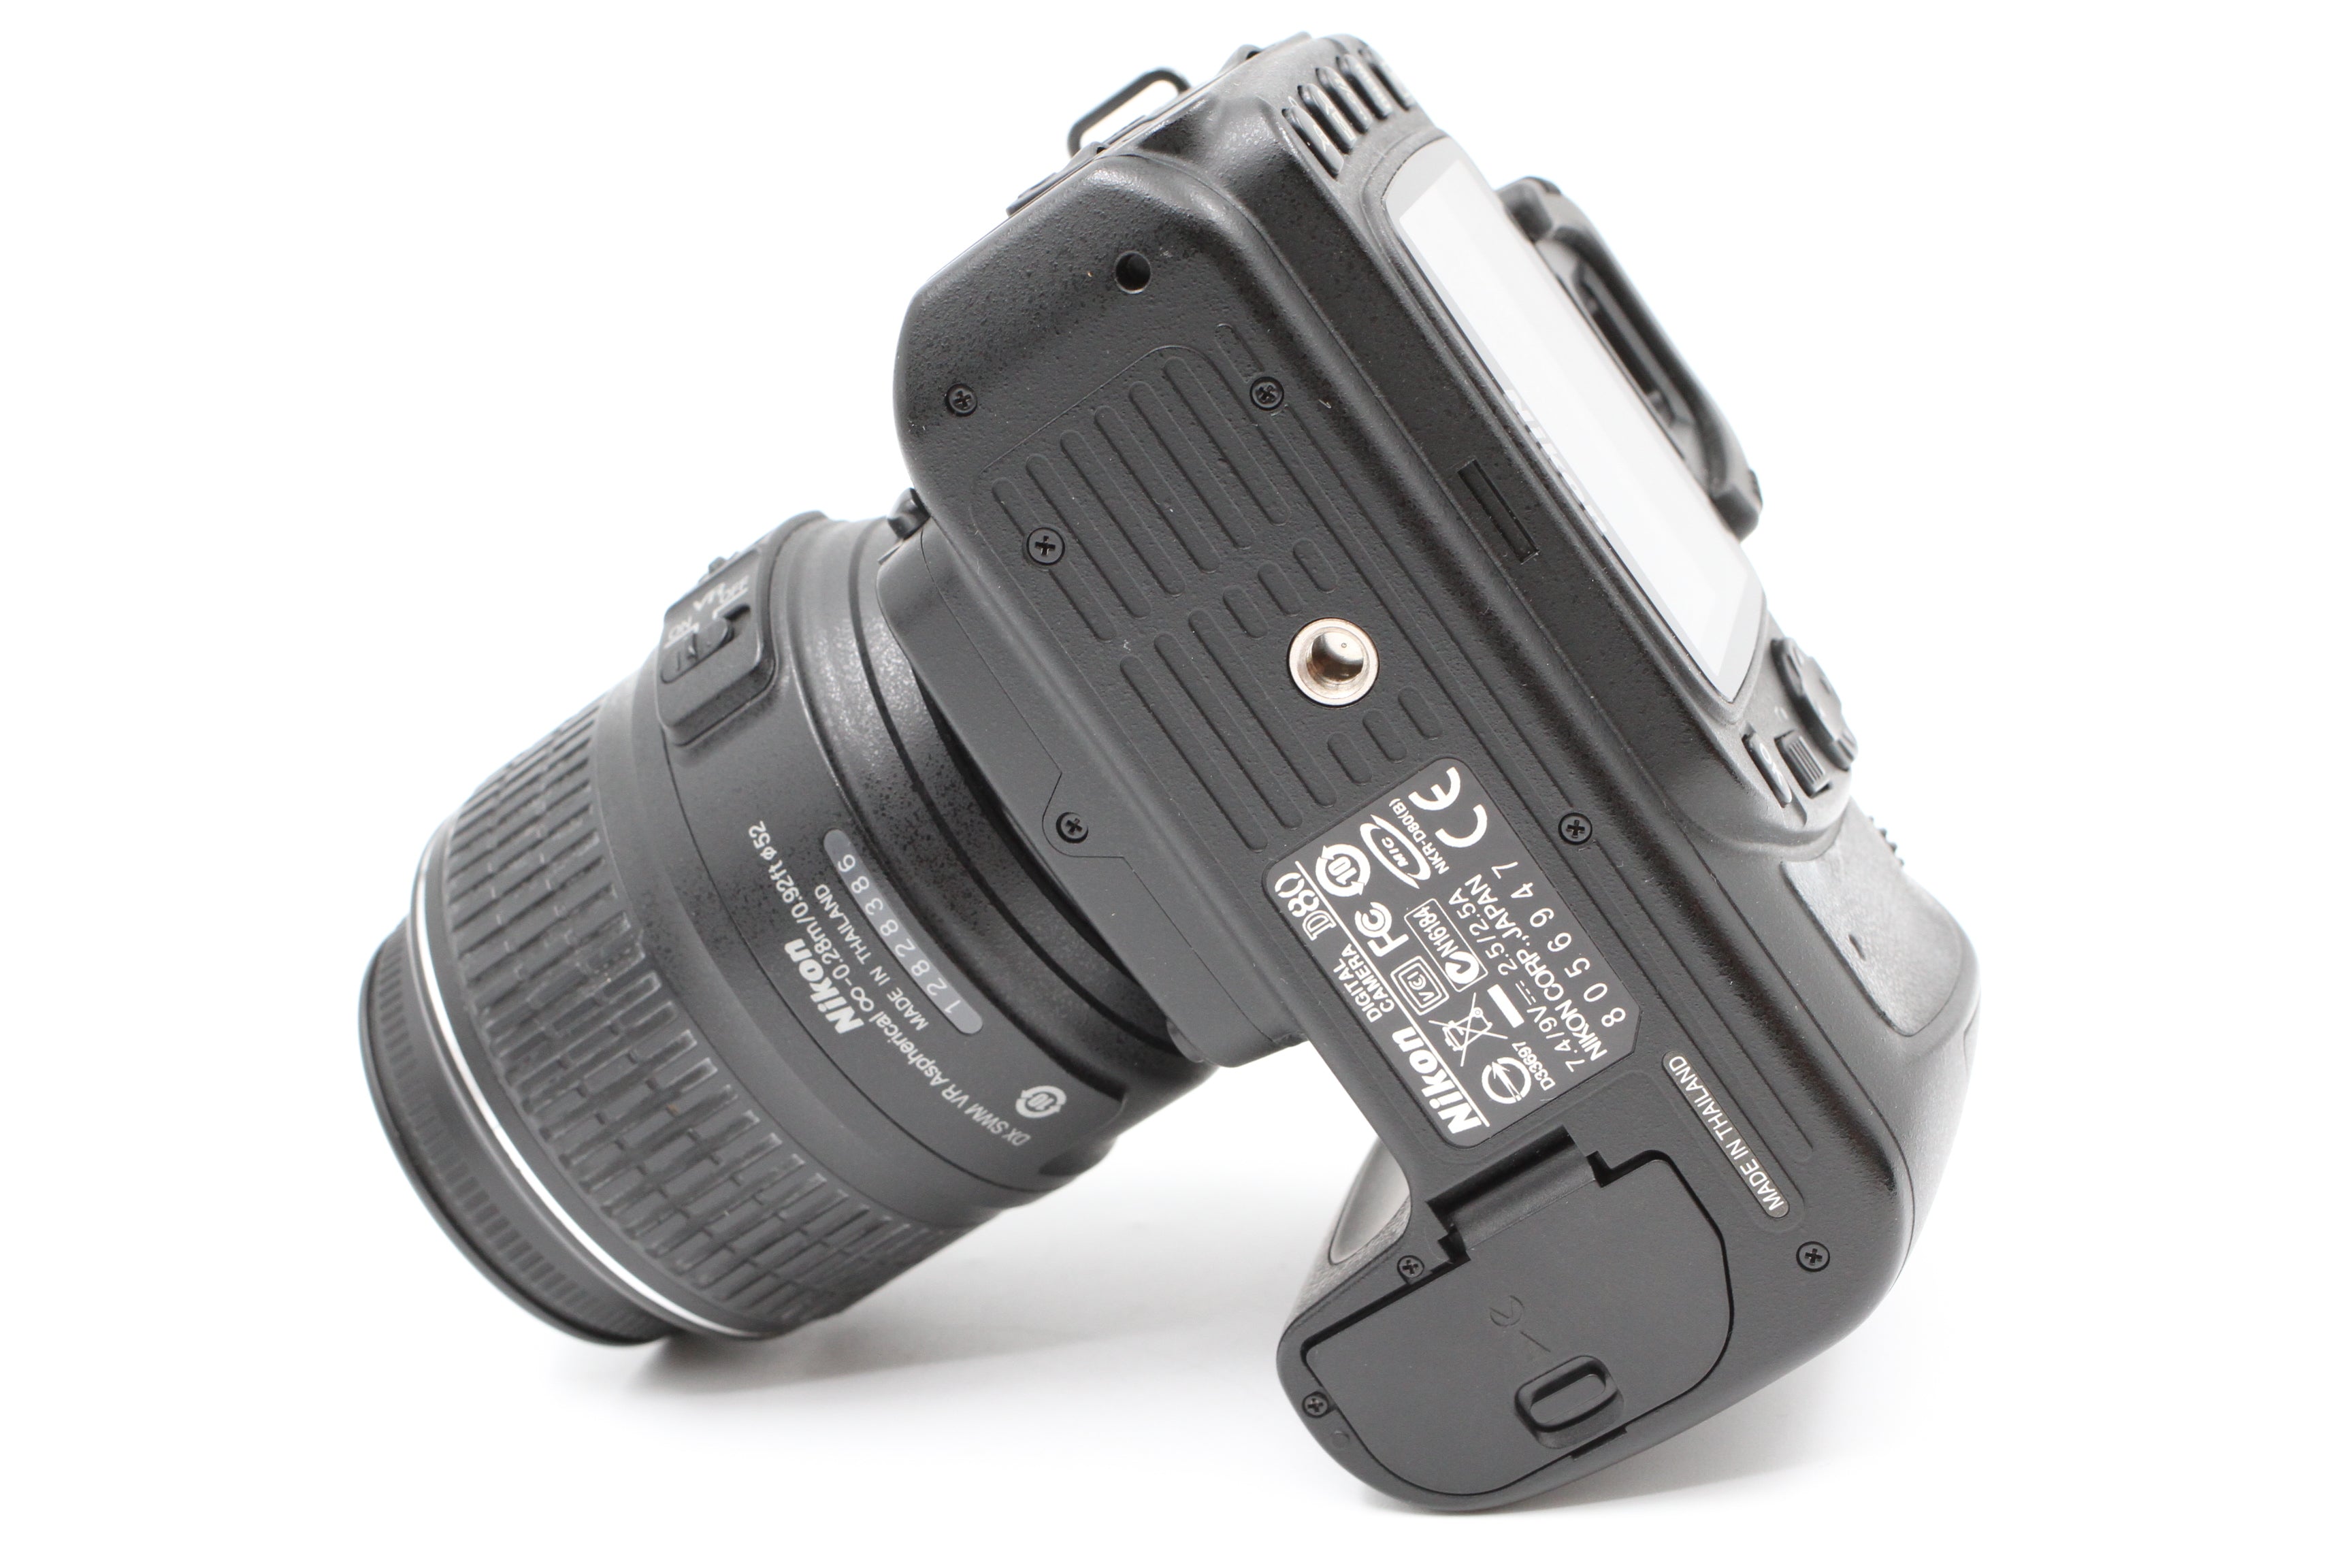 Nikon D80 DSLR Body w/ 18-55mm VR Lens